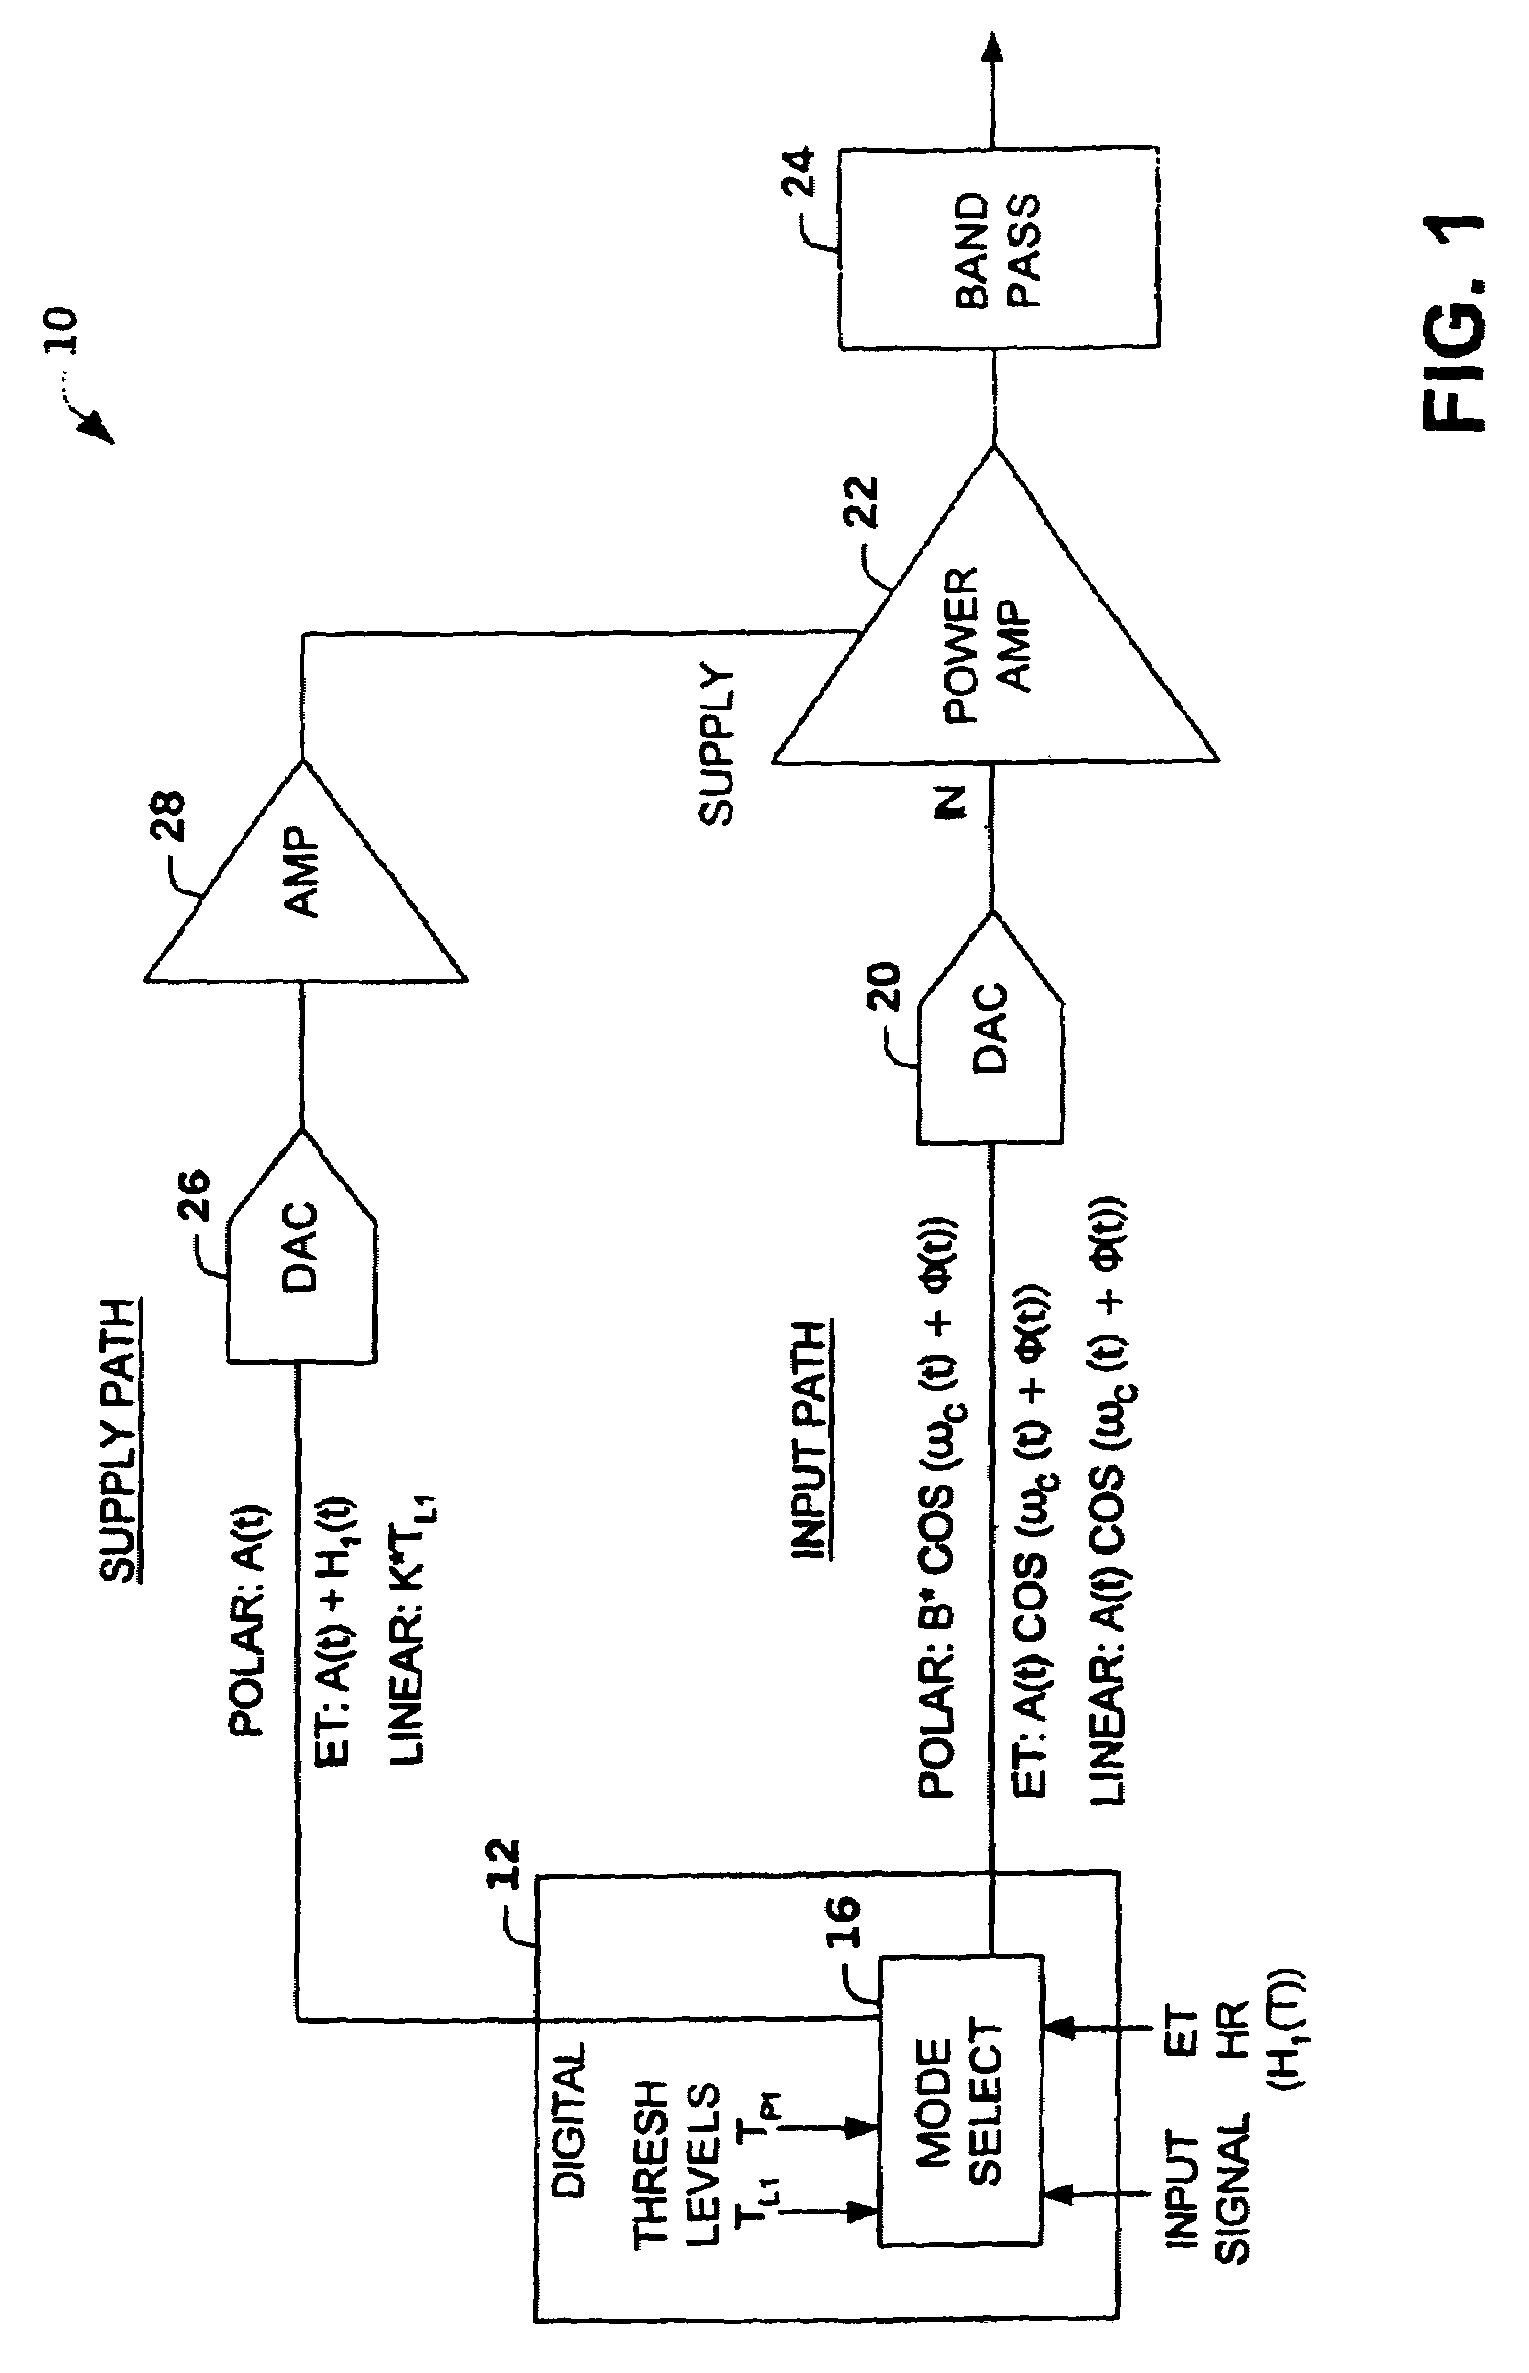 Multi-mode amplifier system